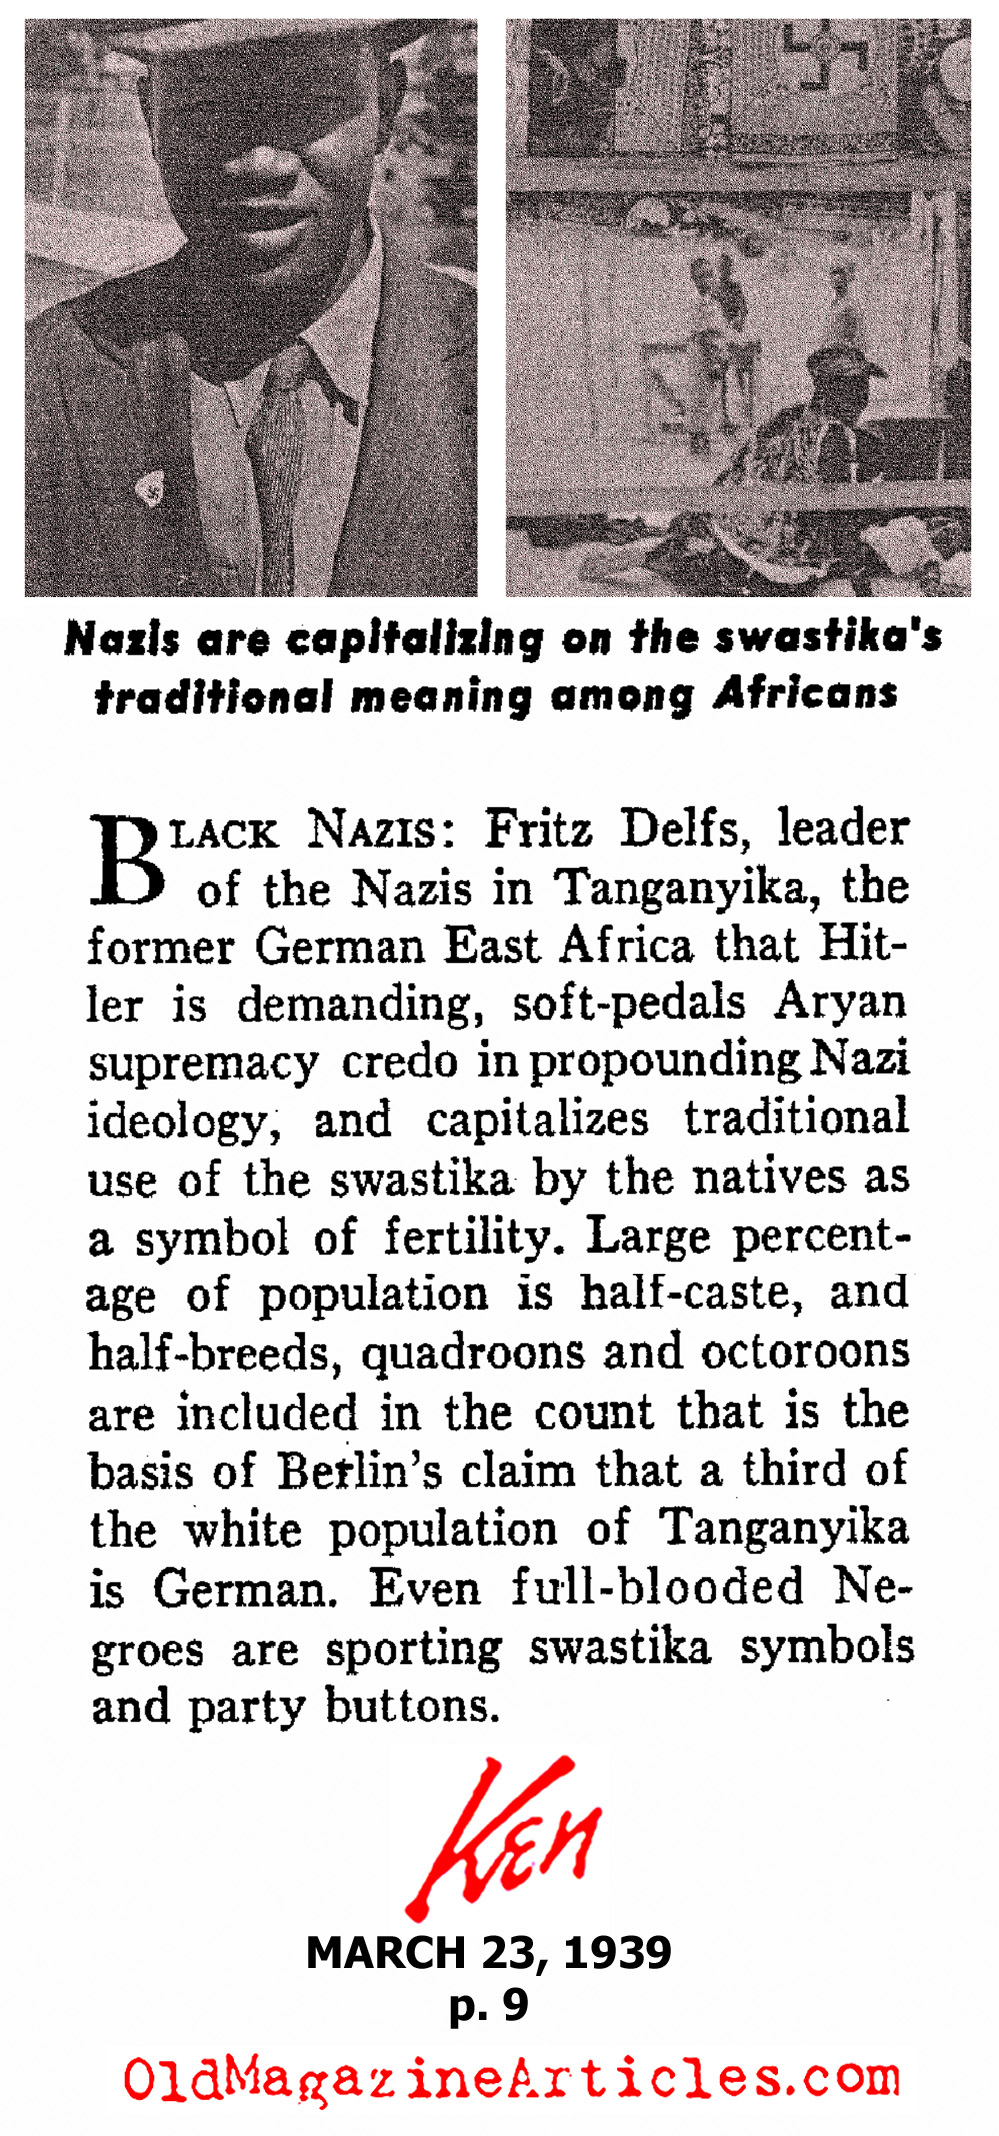 Black Nazis? (Ken Magazine, 1939)